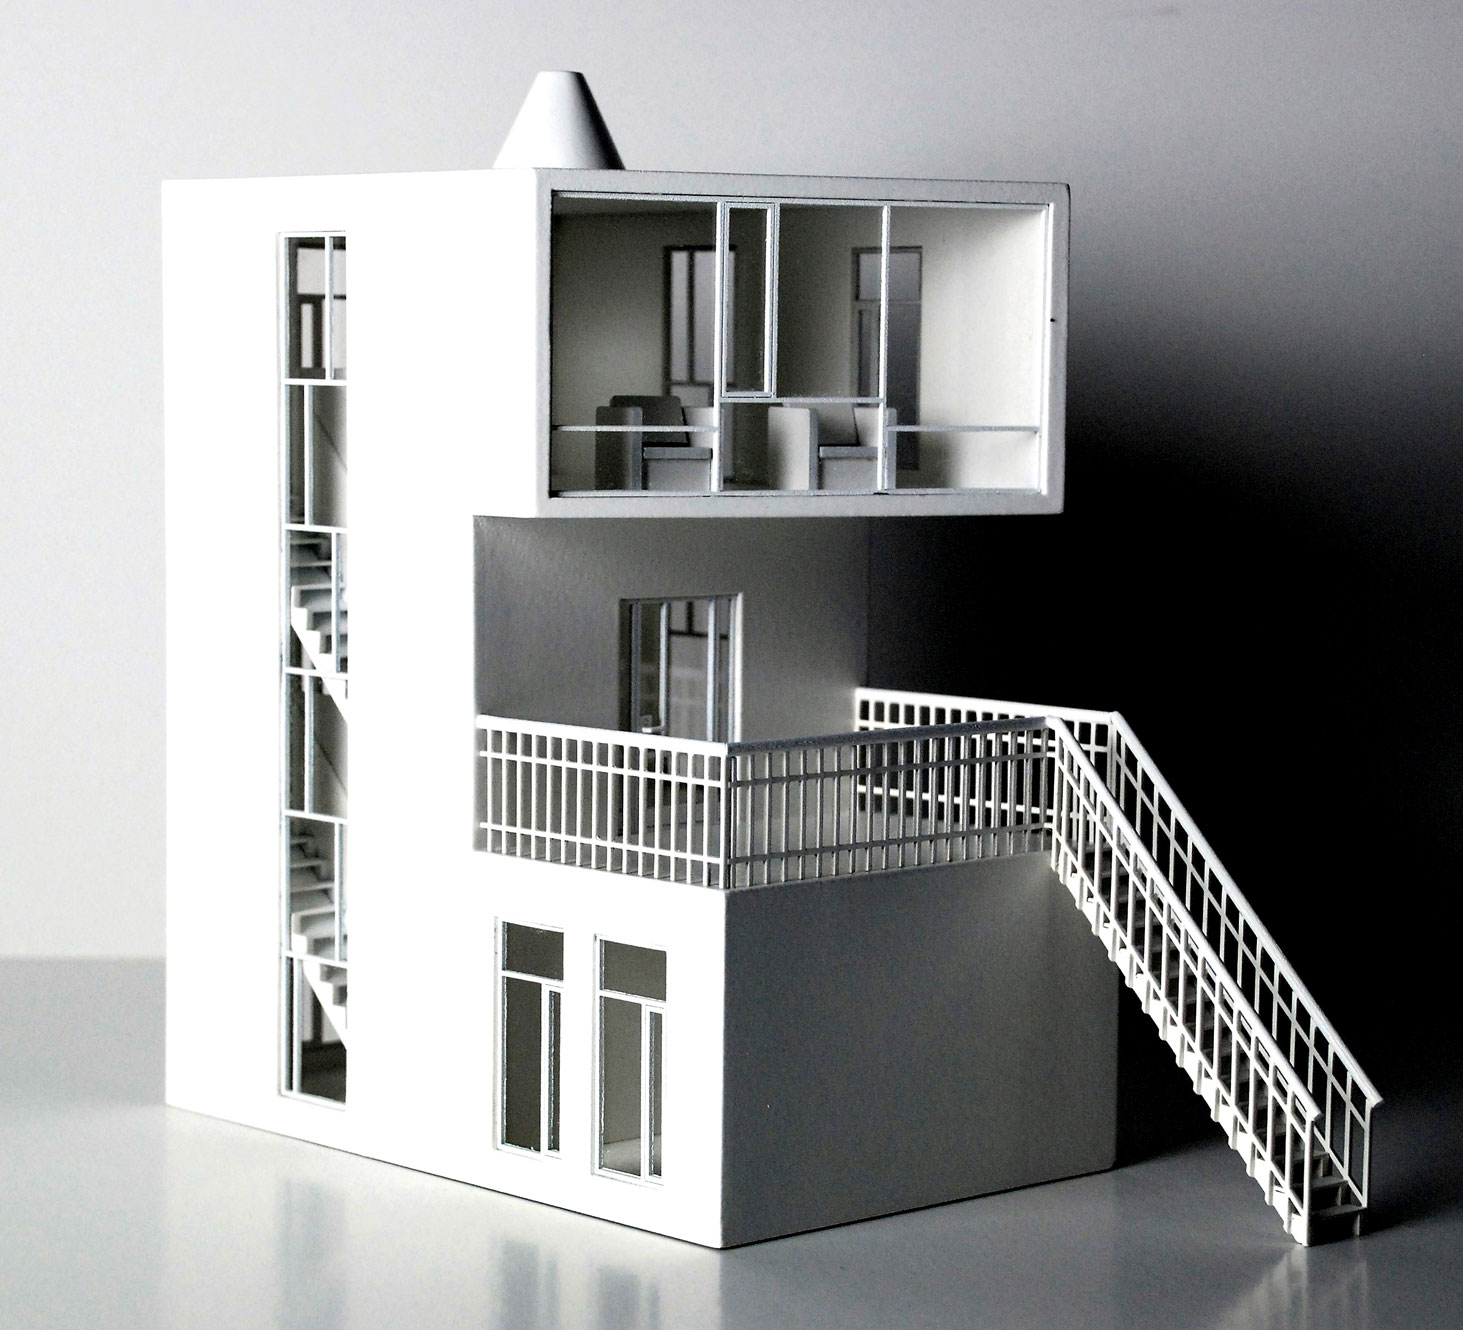 Arkitekturmodell, skala 1:50